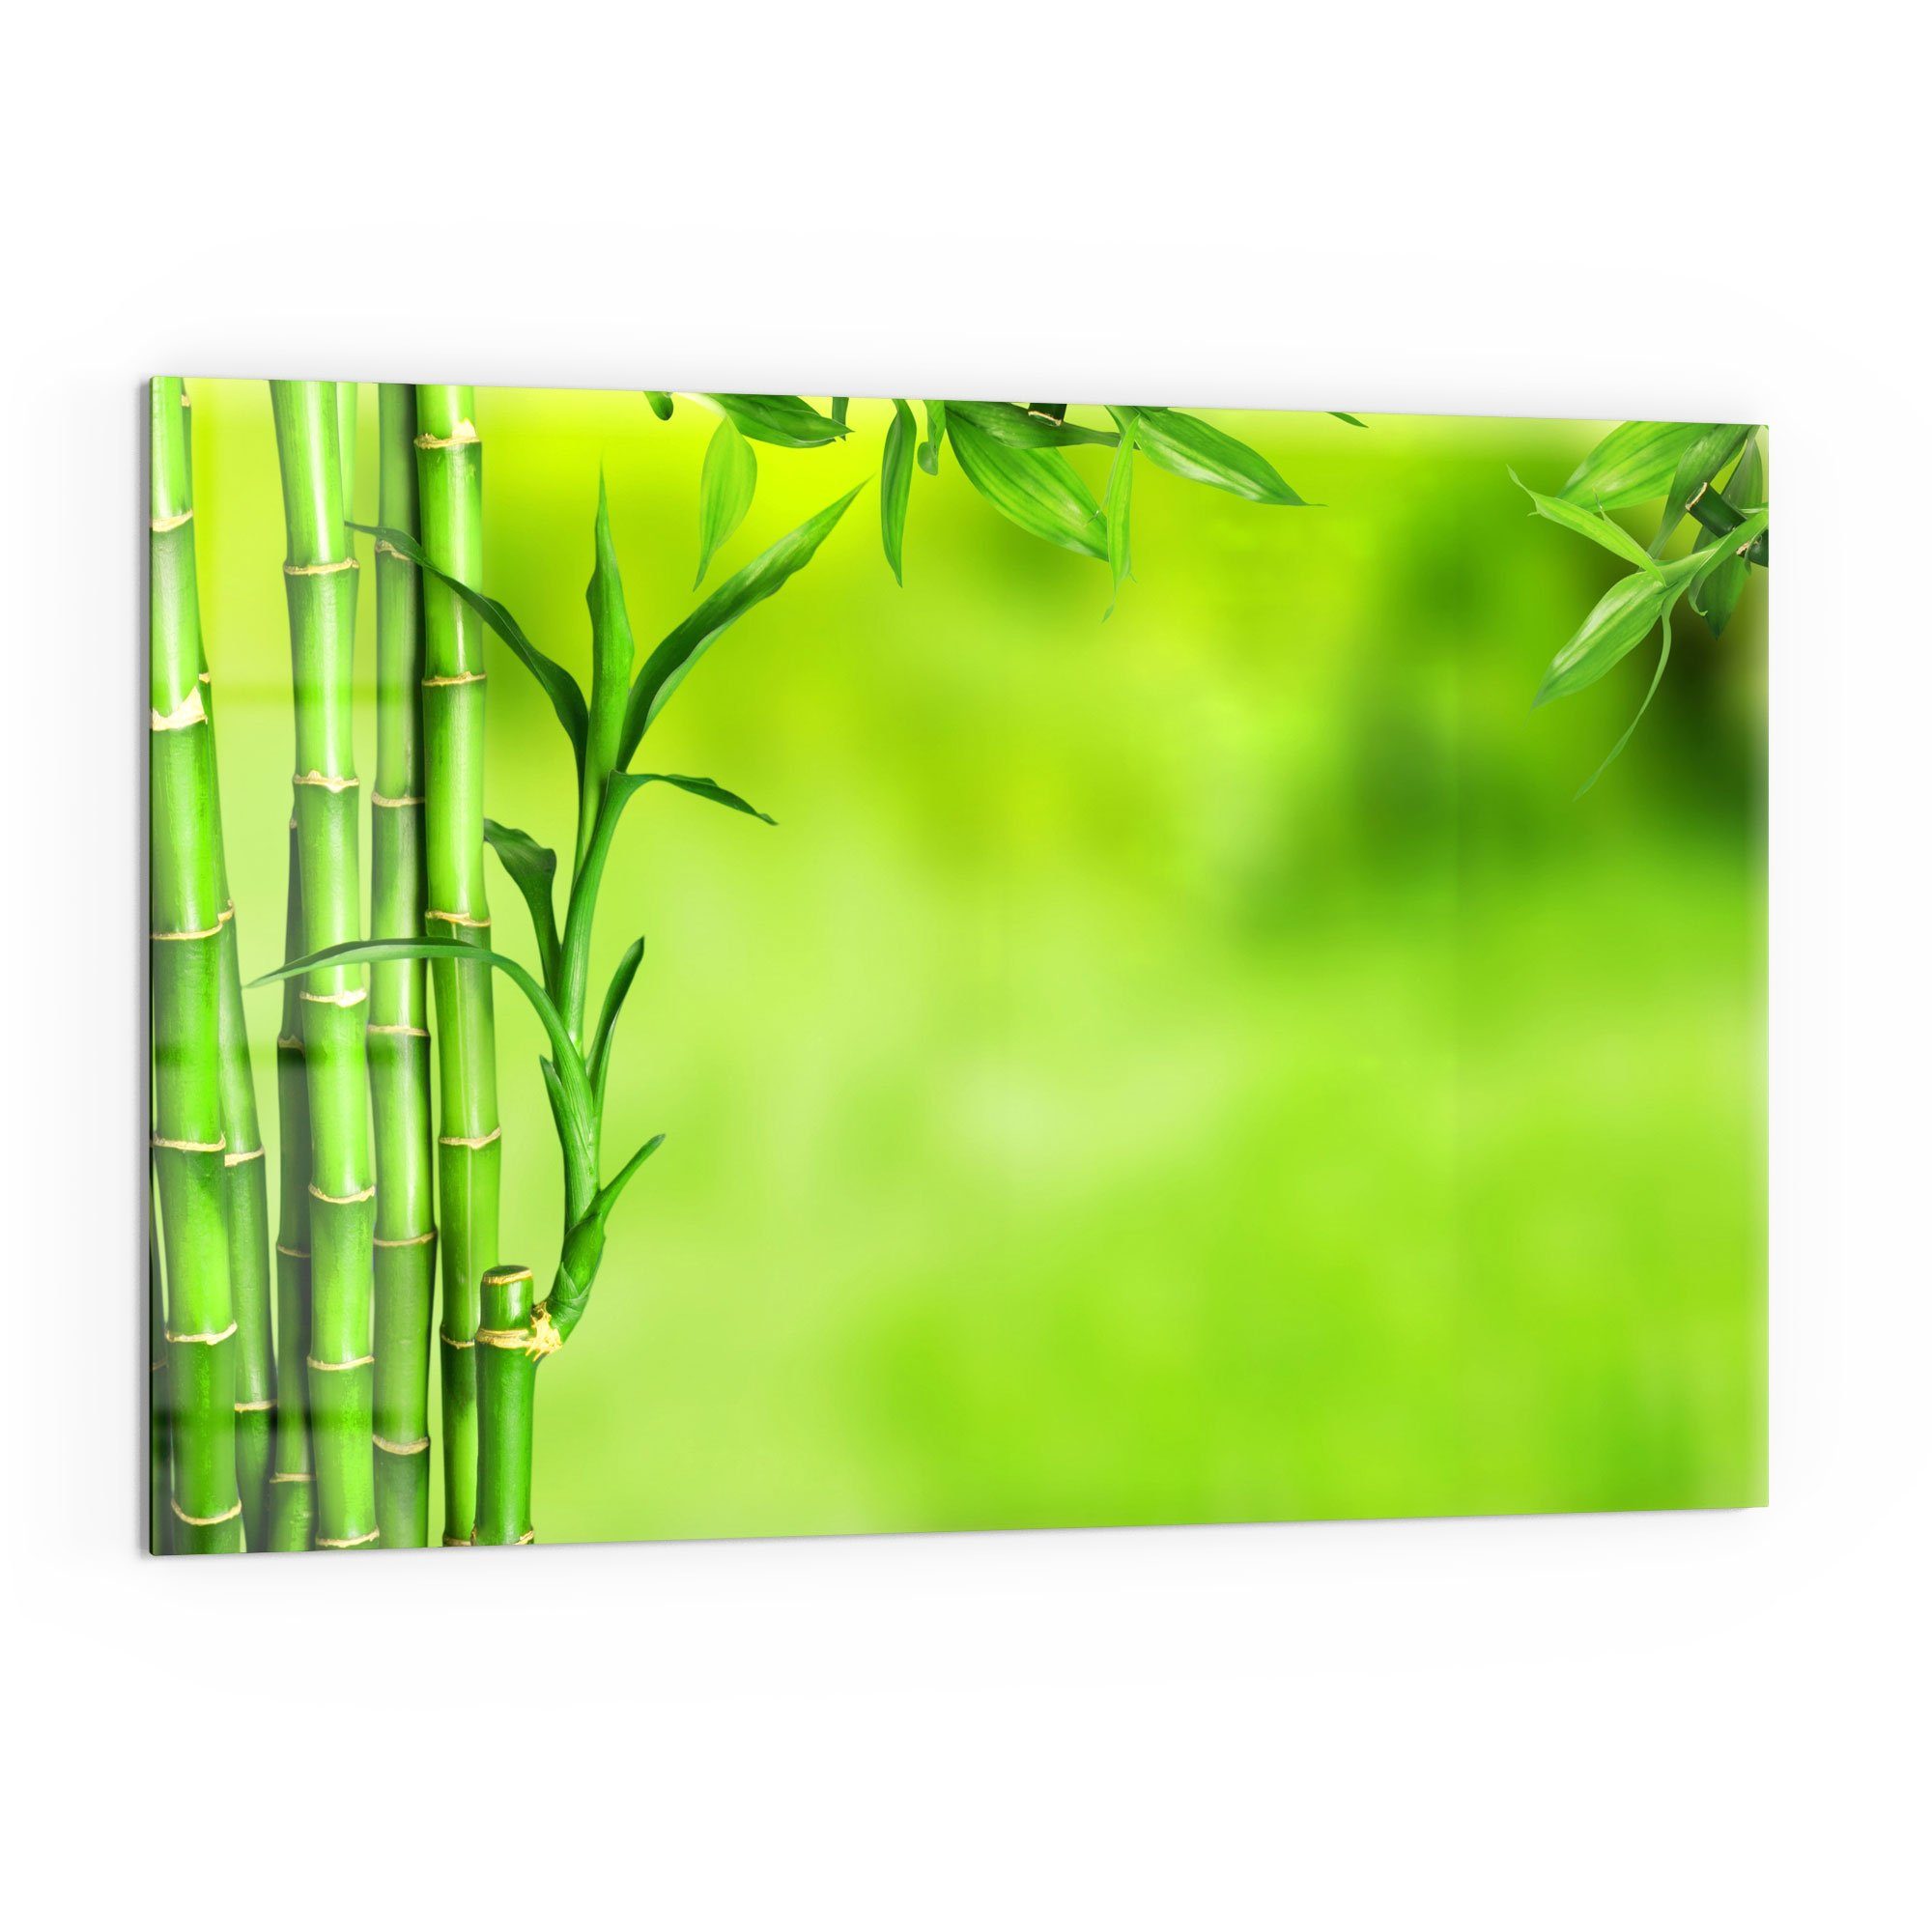 DEQORI Küchenrückwand 'Grüne Bambushalme', Glas Spritzschutz Badrückwand Herdblende